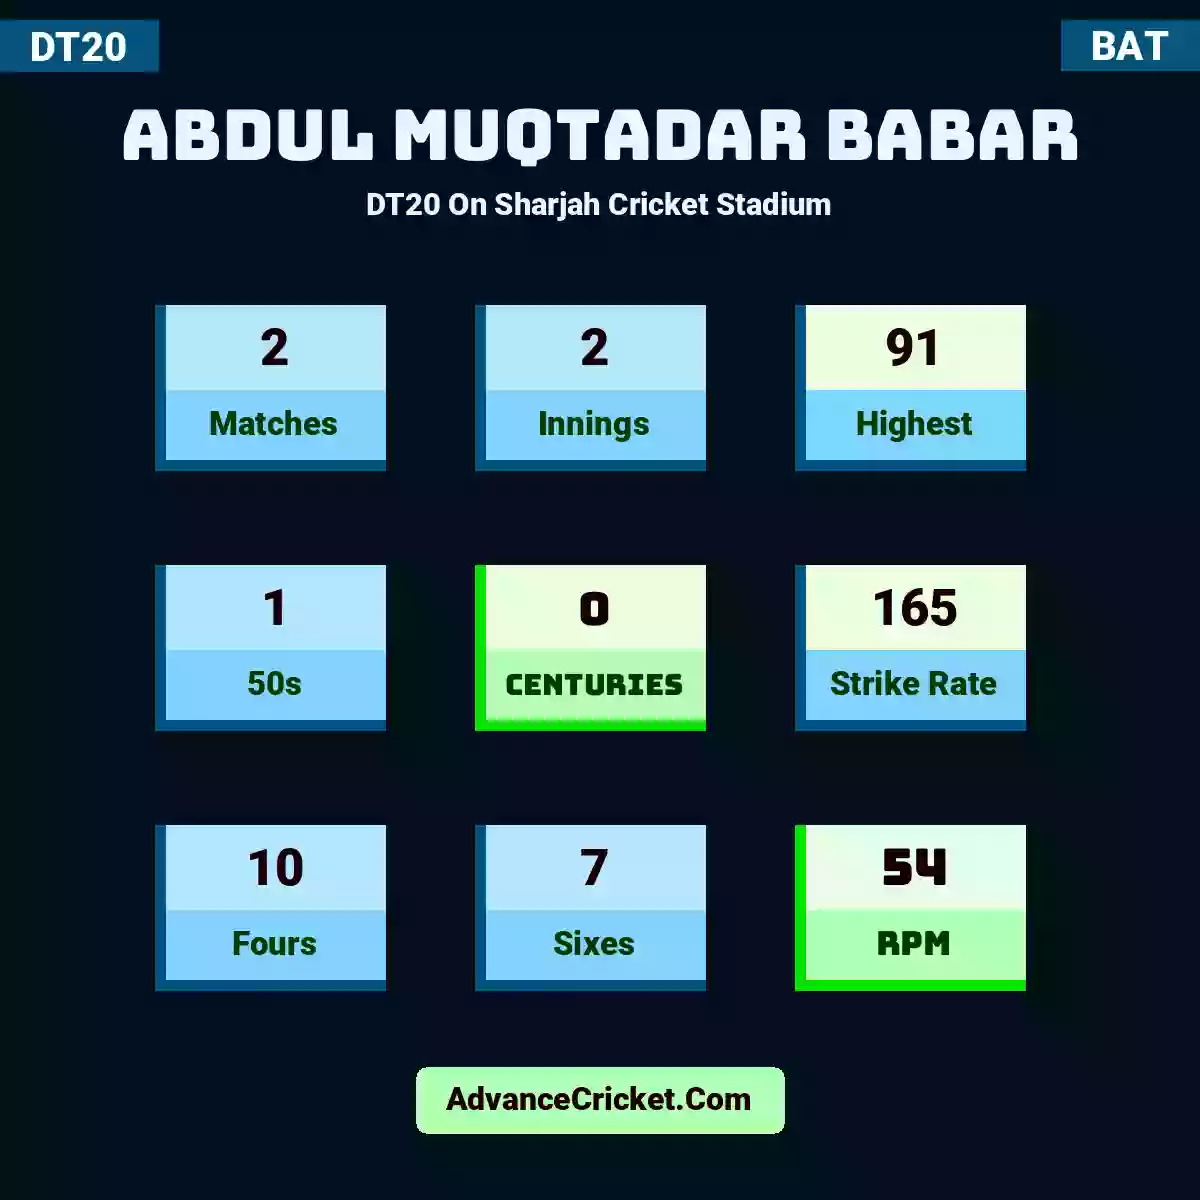 Abdul Muqtadar Babar DT20  On Sharjah Cricket Stadium, Abdul Muqtadar Babar played 2 matches, scored 91 runs as highest, 1 half-centuries, and 0 centuries, with a strike rate of 165. A.Muqtadar.Babar hit 10 fours and 7 sixes, with an RPM of 54.